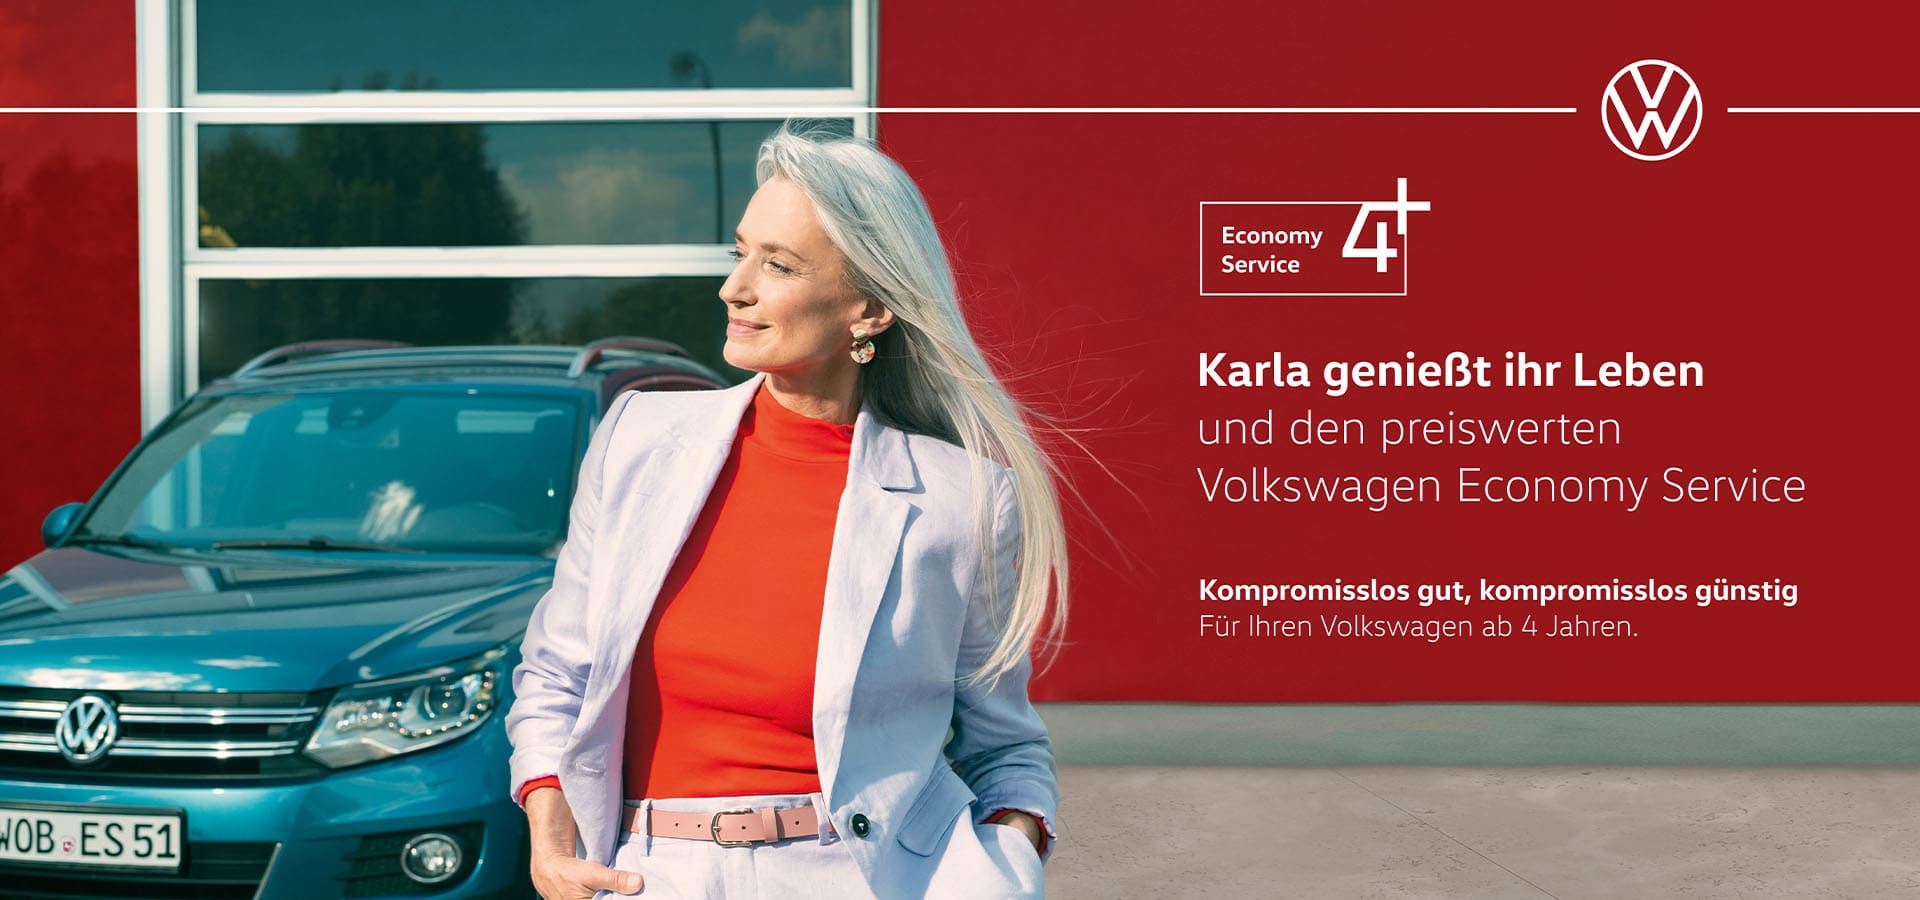 Volkswagen Economy Service 4+